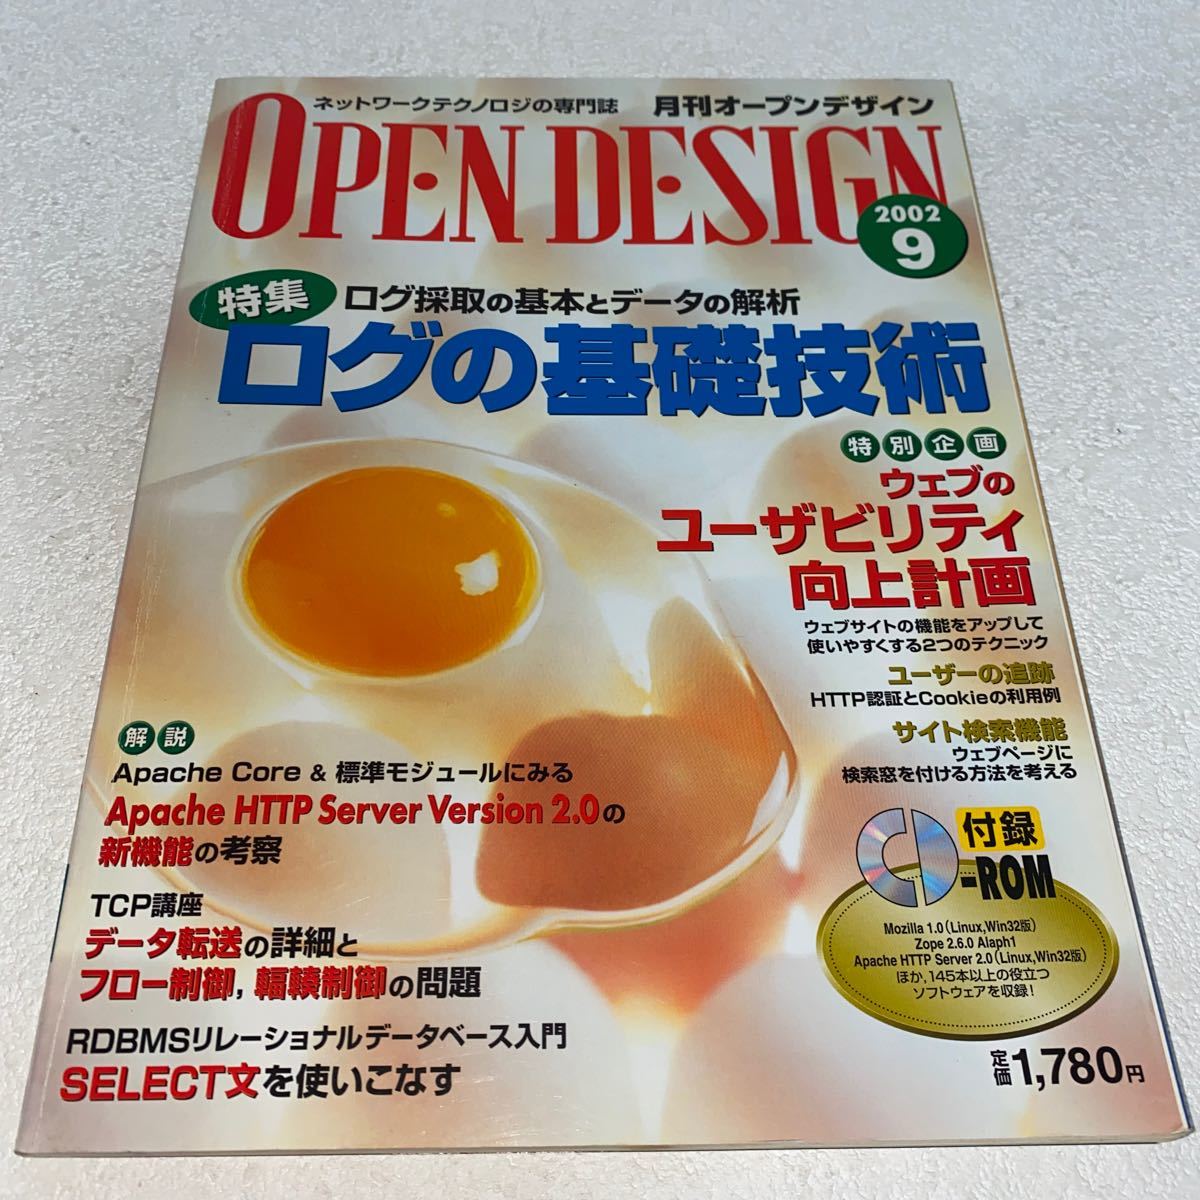 19 OPEN DESIGN月刊オープンデザイン ネットワークテクノロジの専門誌 2002年9月号 注目ショップ 送料0円 ログの基礎技術 ユーザビリティ向上計画